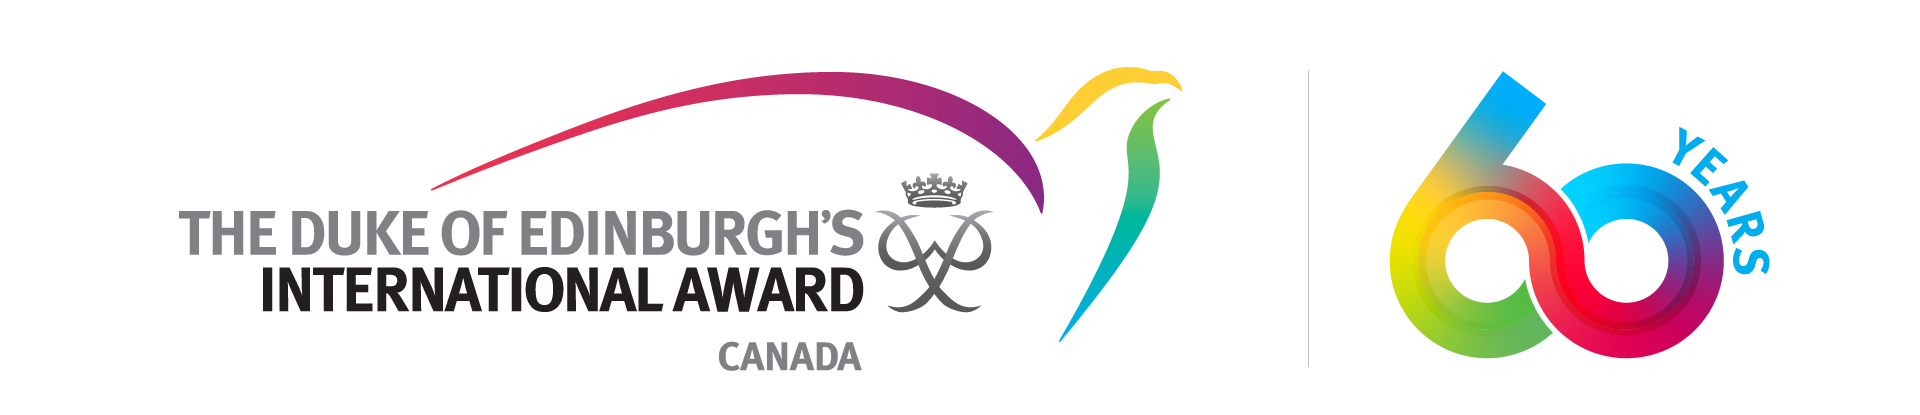 The Duke of Edinburgh's International Award Canada